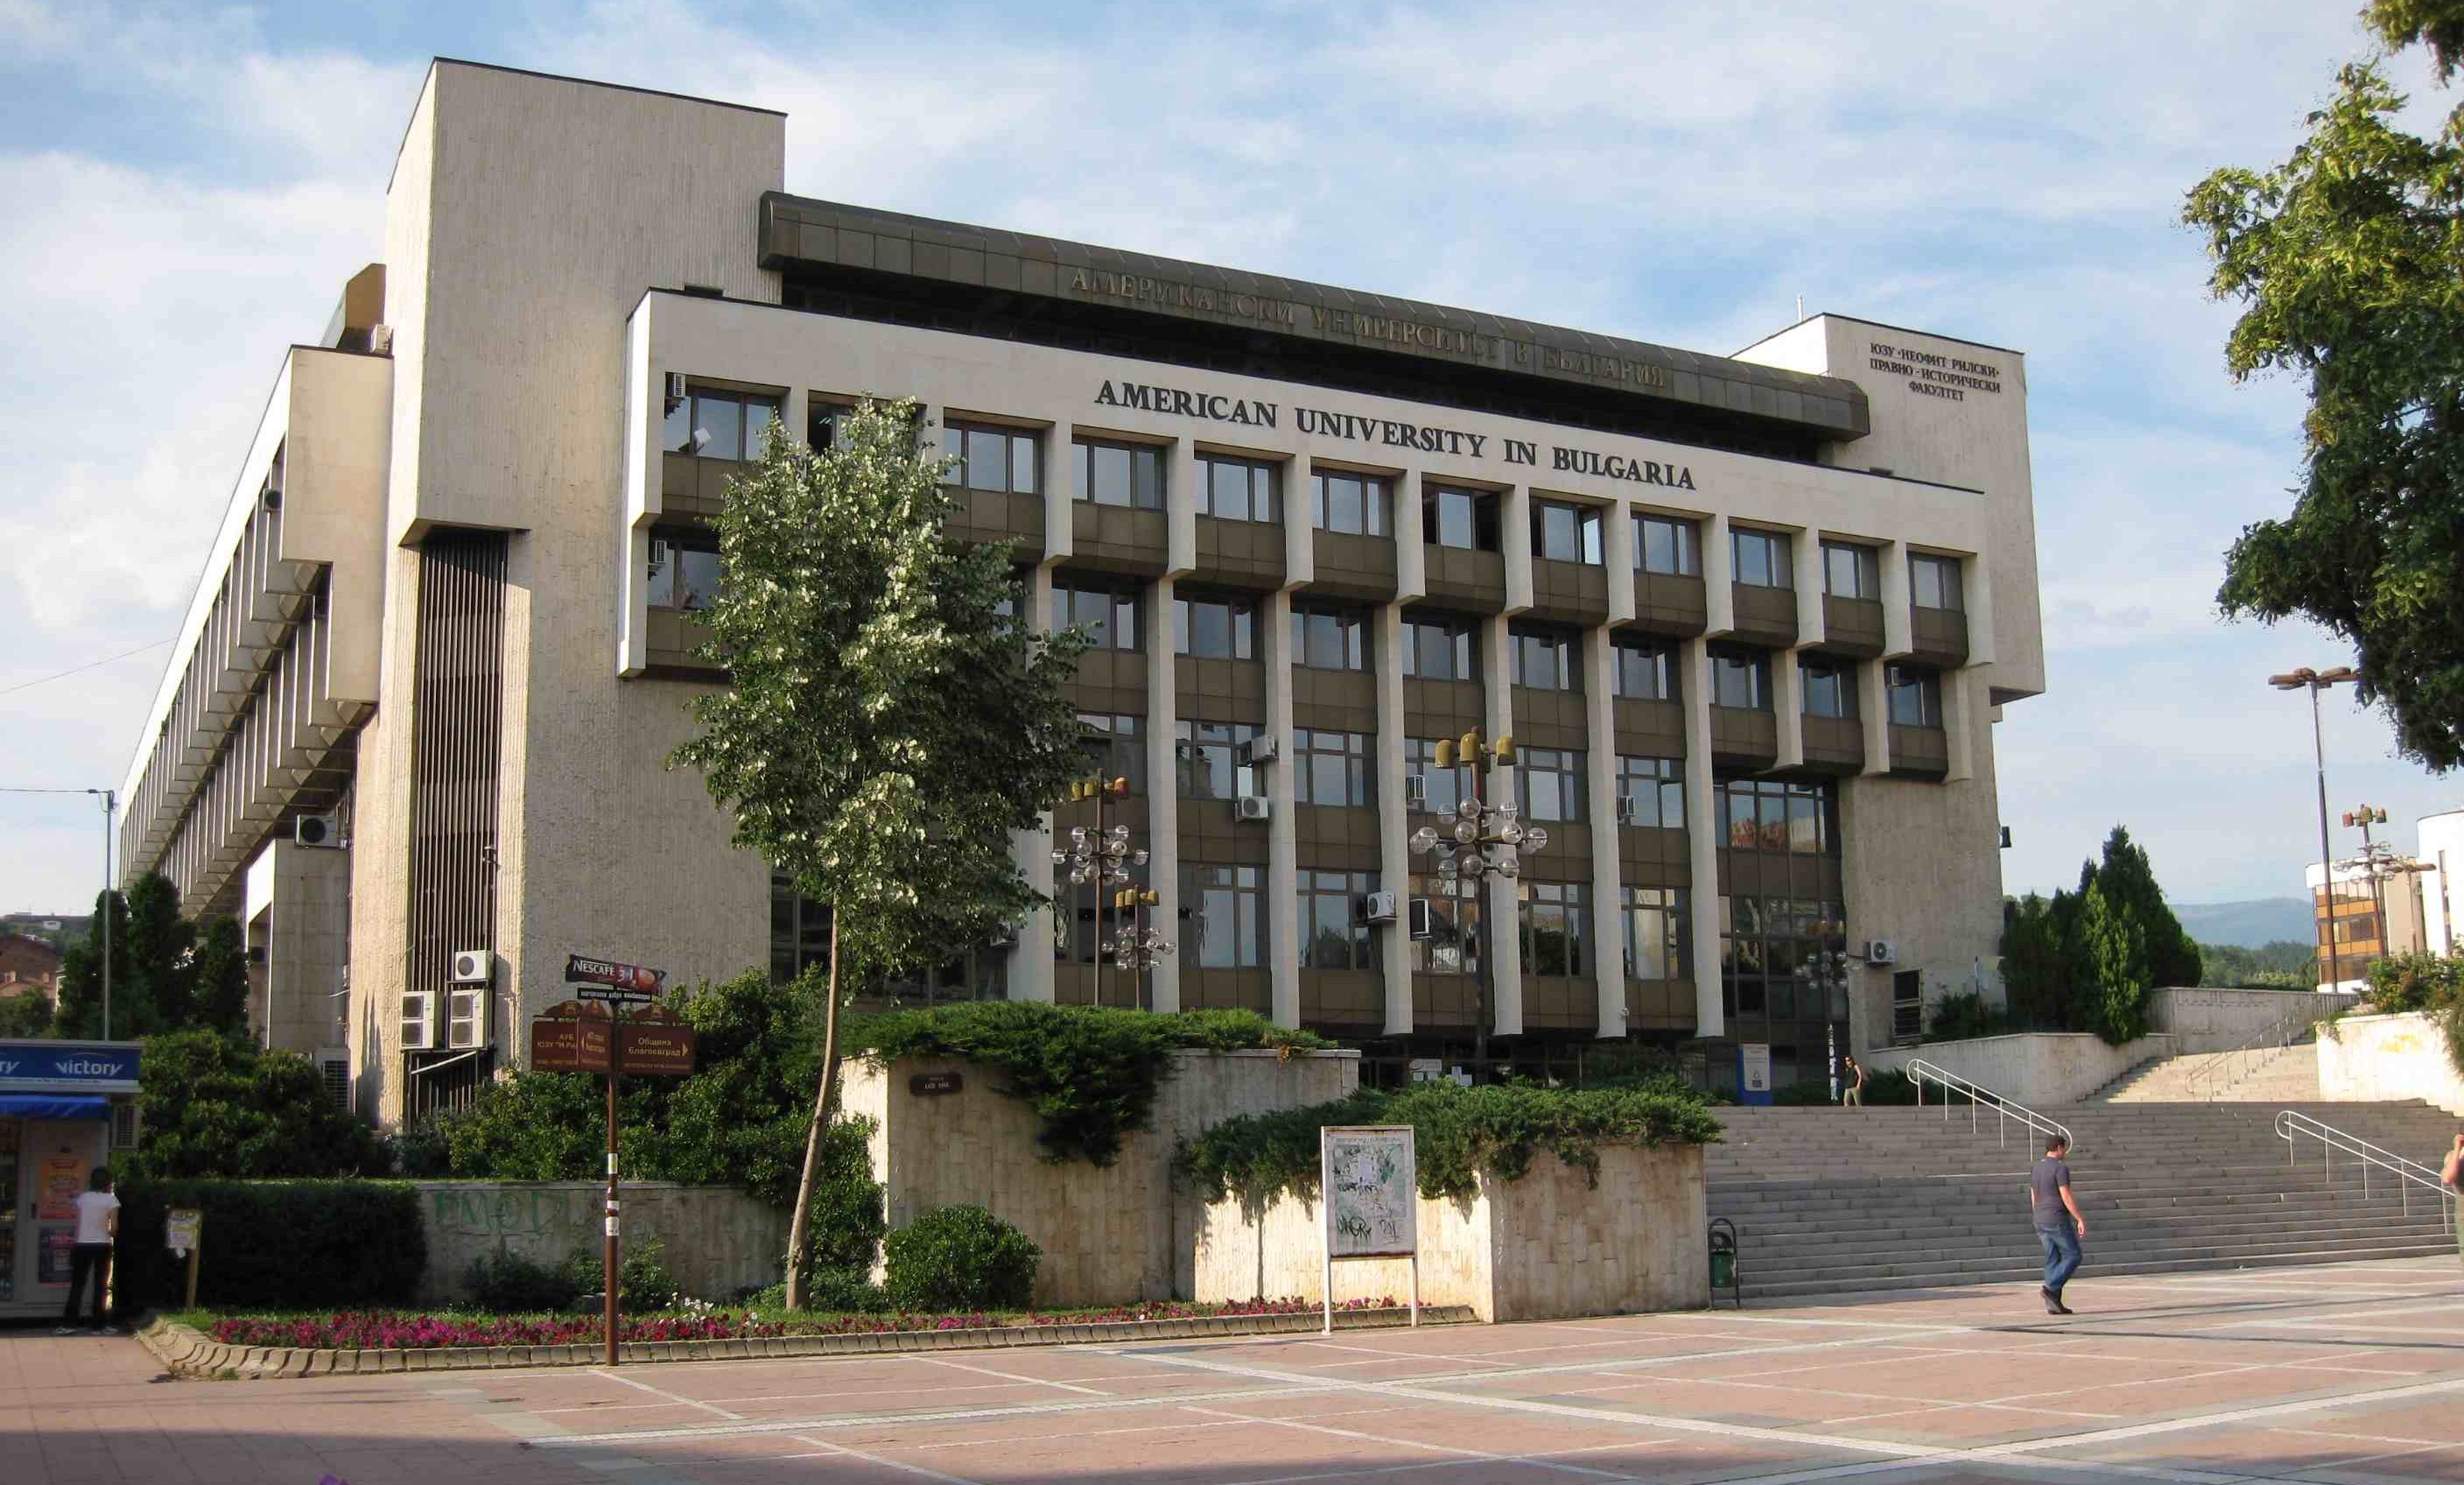 University building in Blagoevgrad, Bulgaria